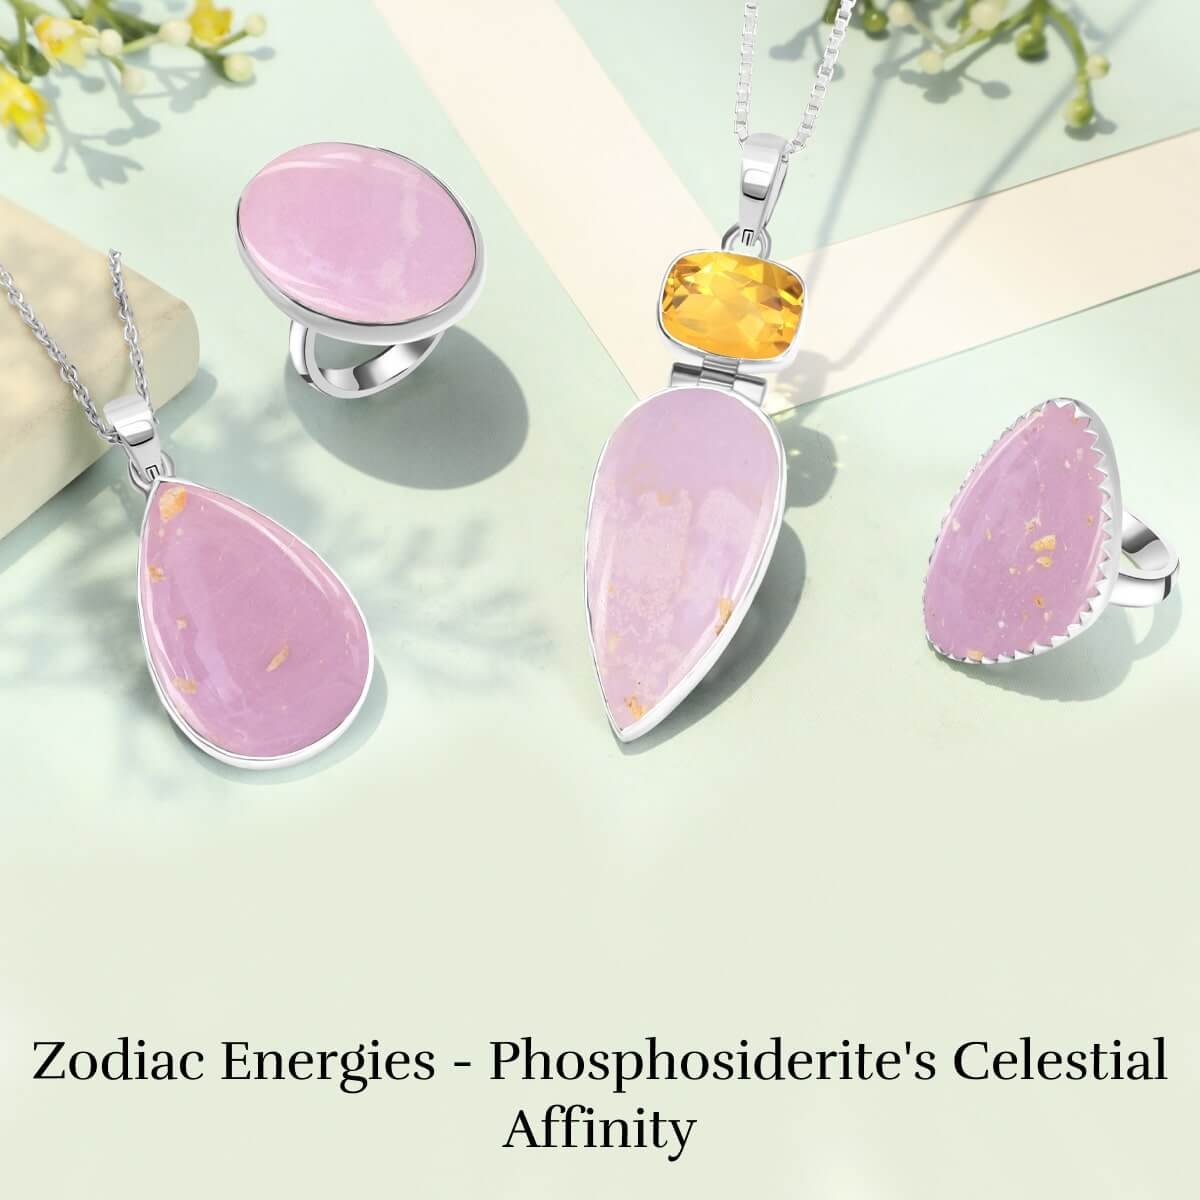 Phosphosiderite: Zodiac sign